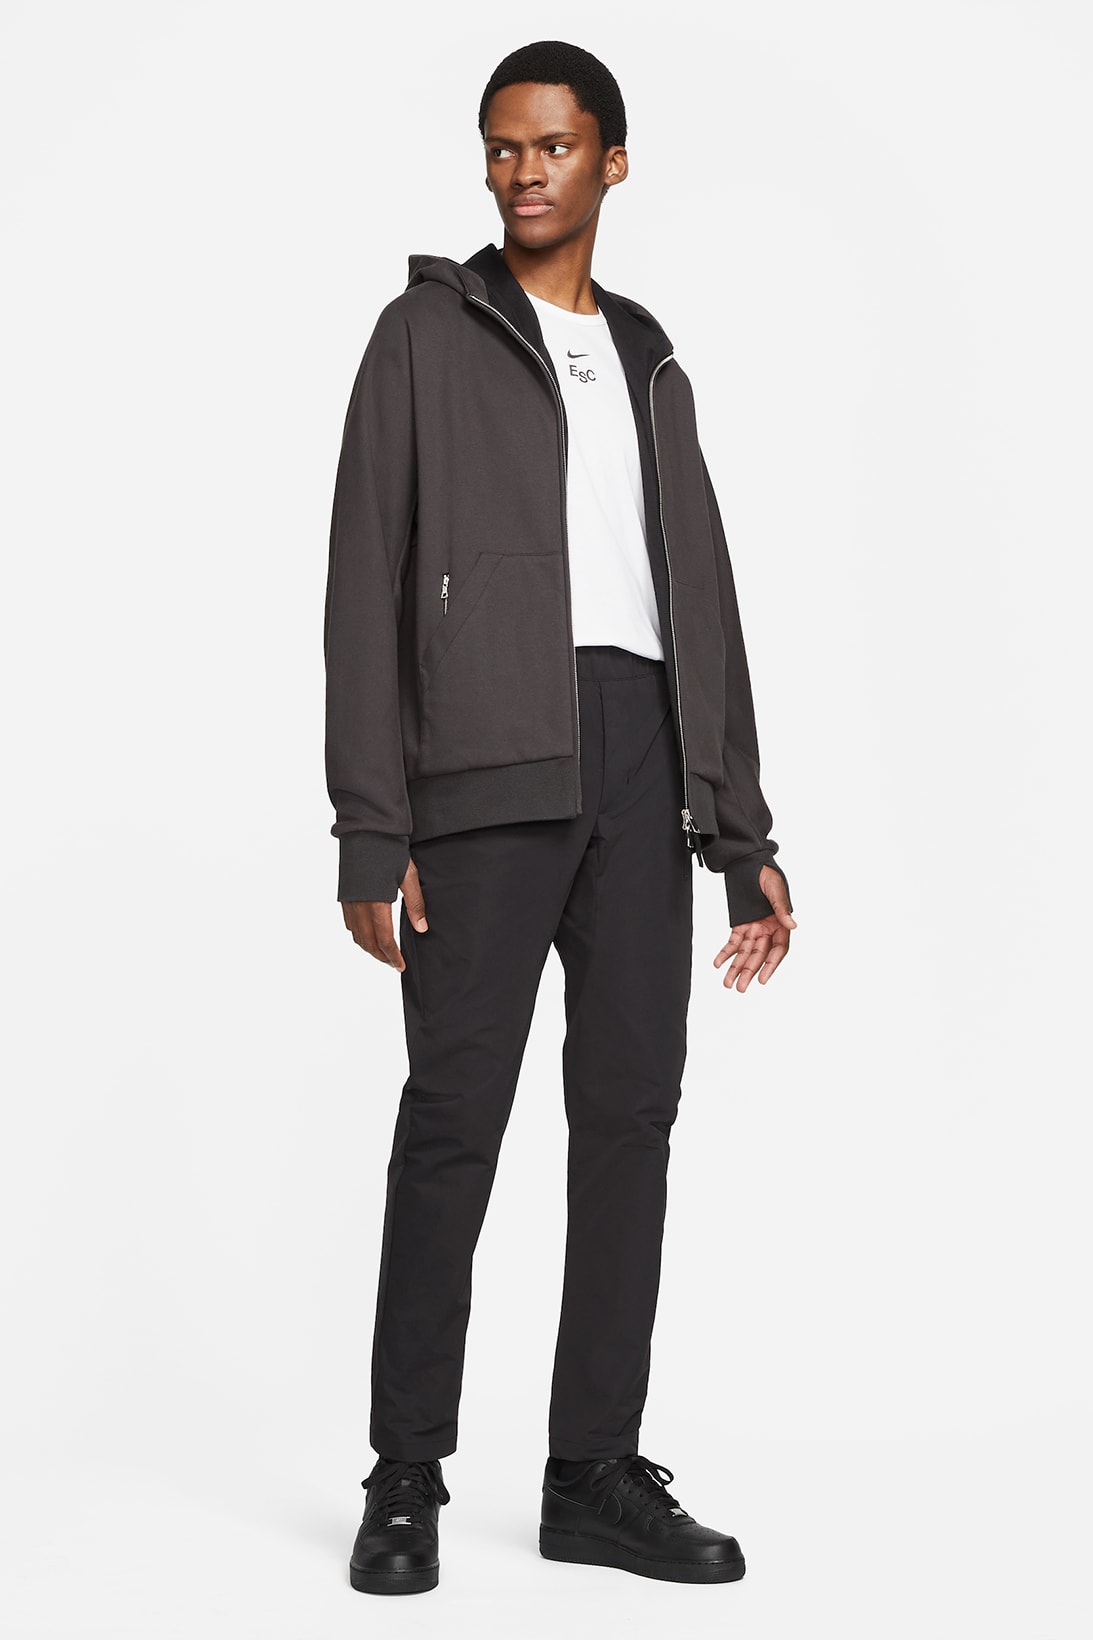 nike design exploration apparel collection outerwear jacket t shirt pants